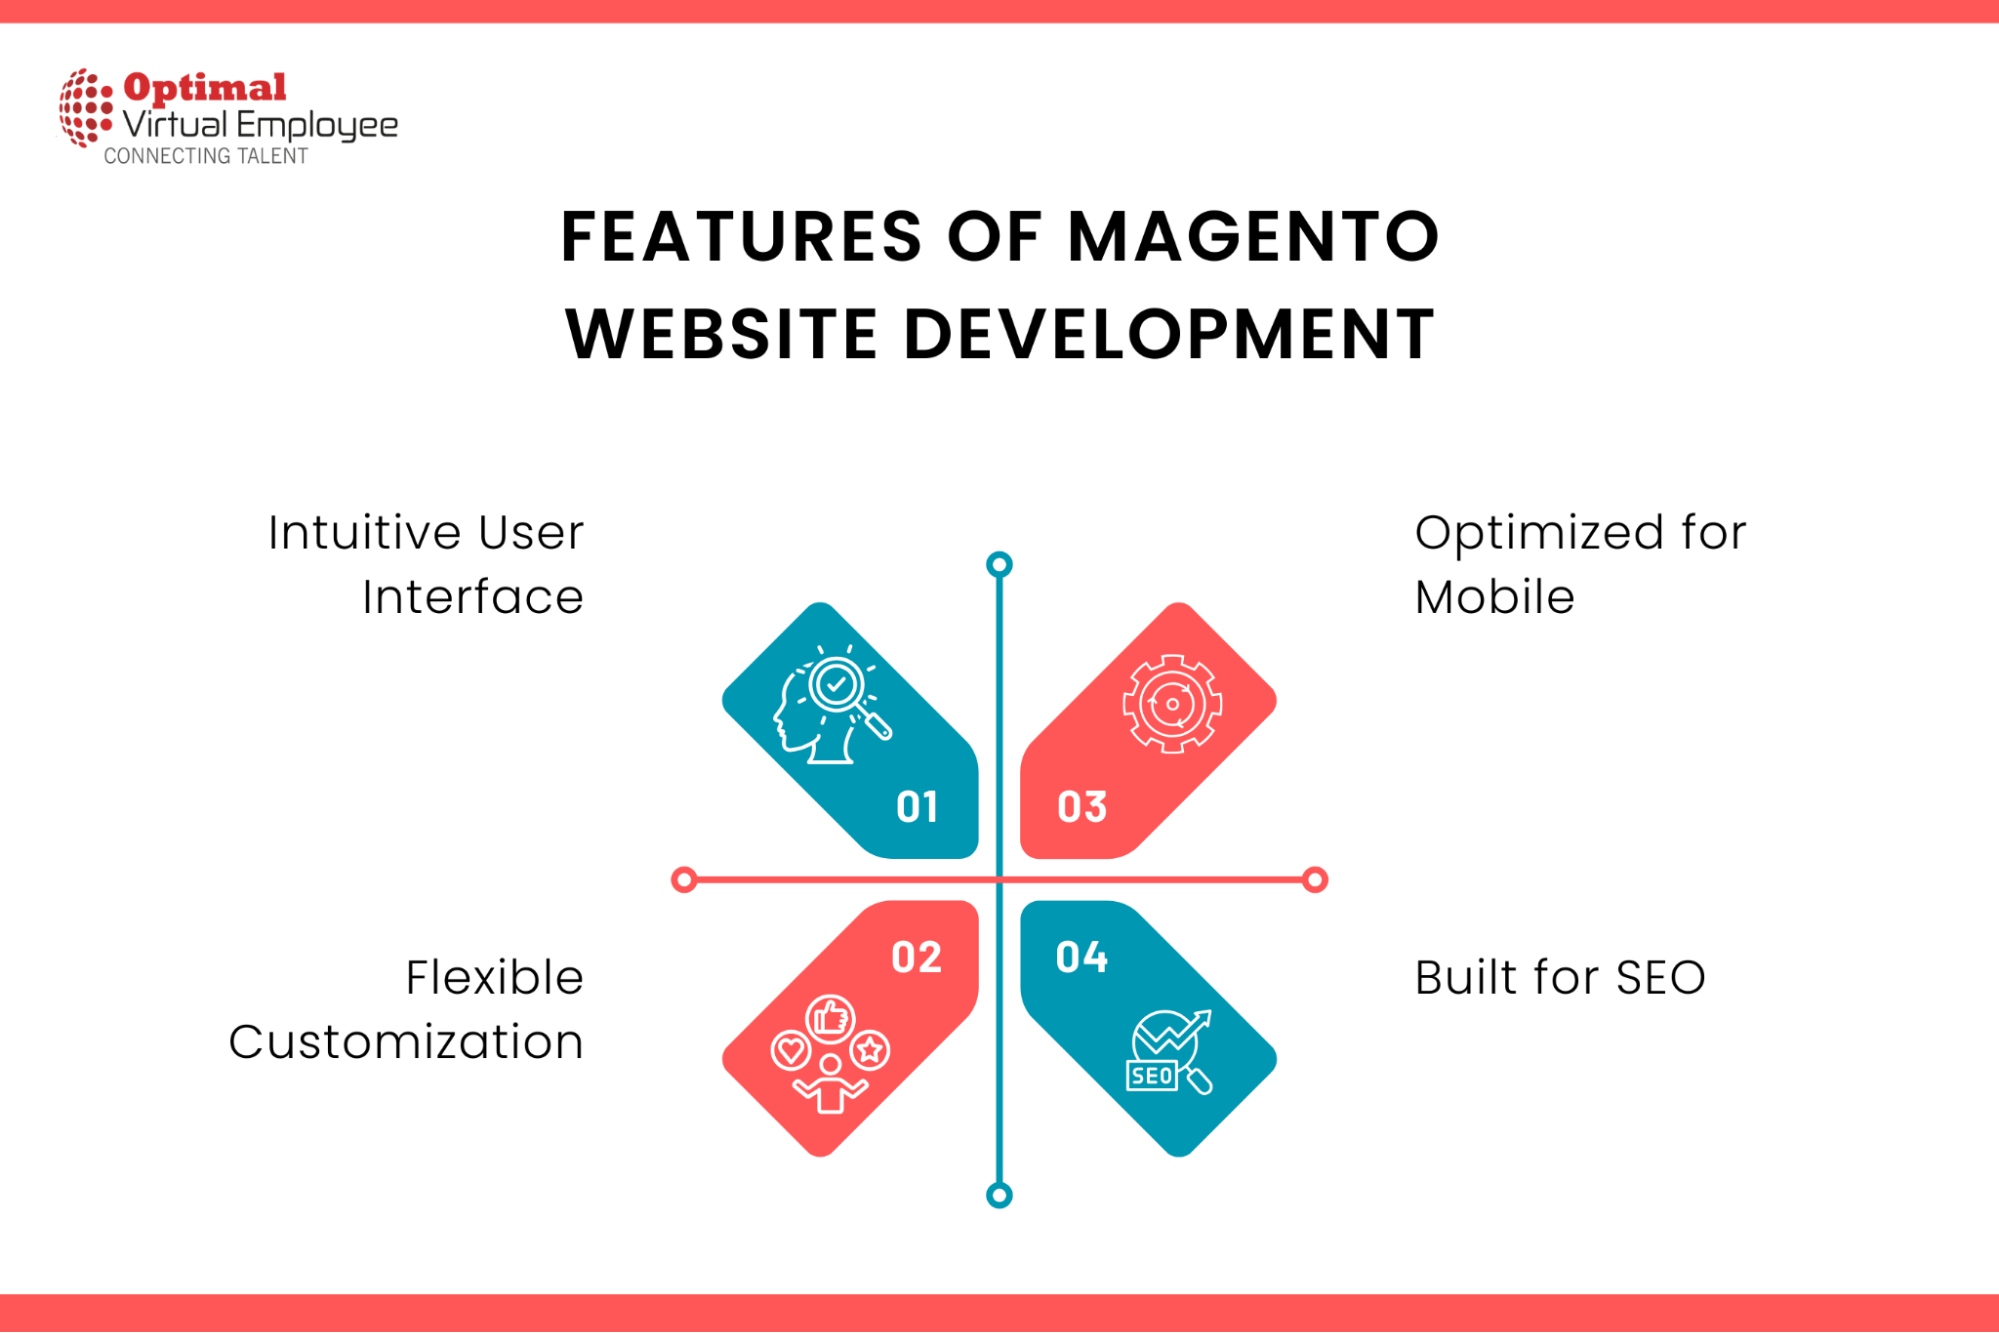 Key Features of Magento Website Development